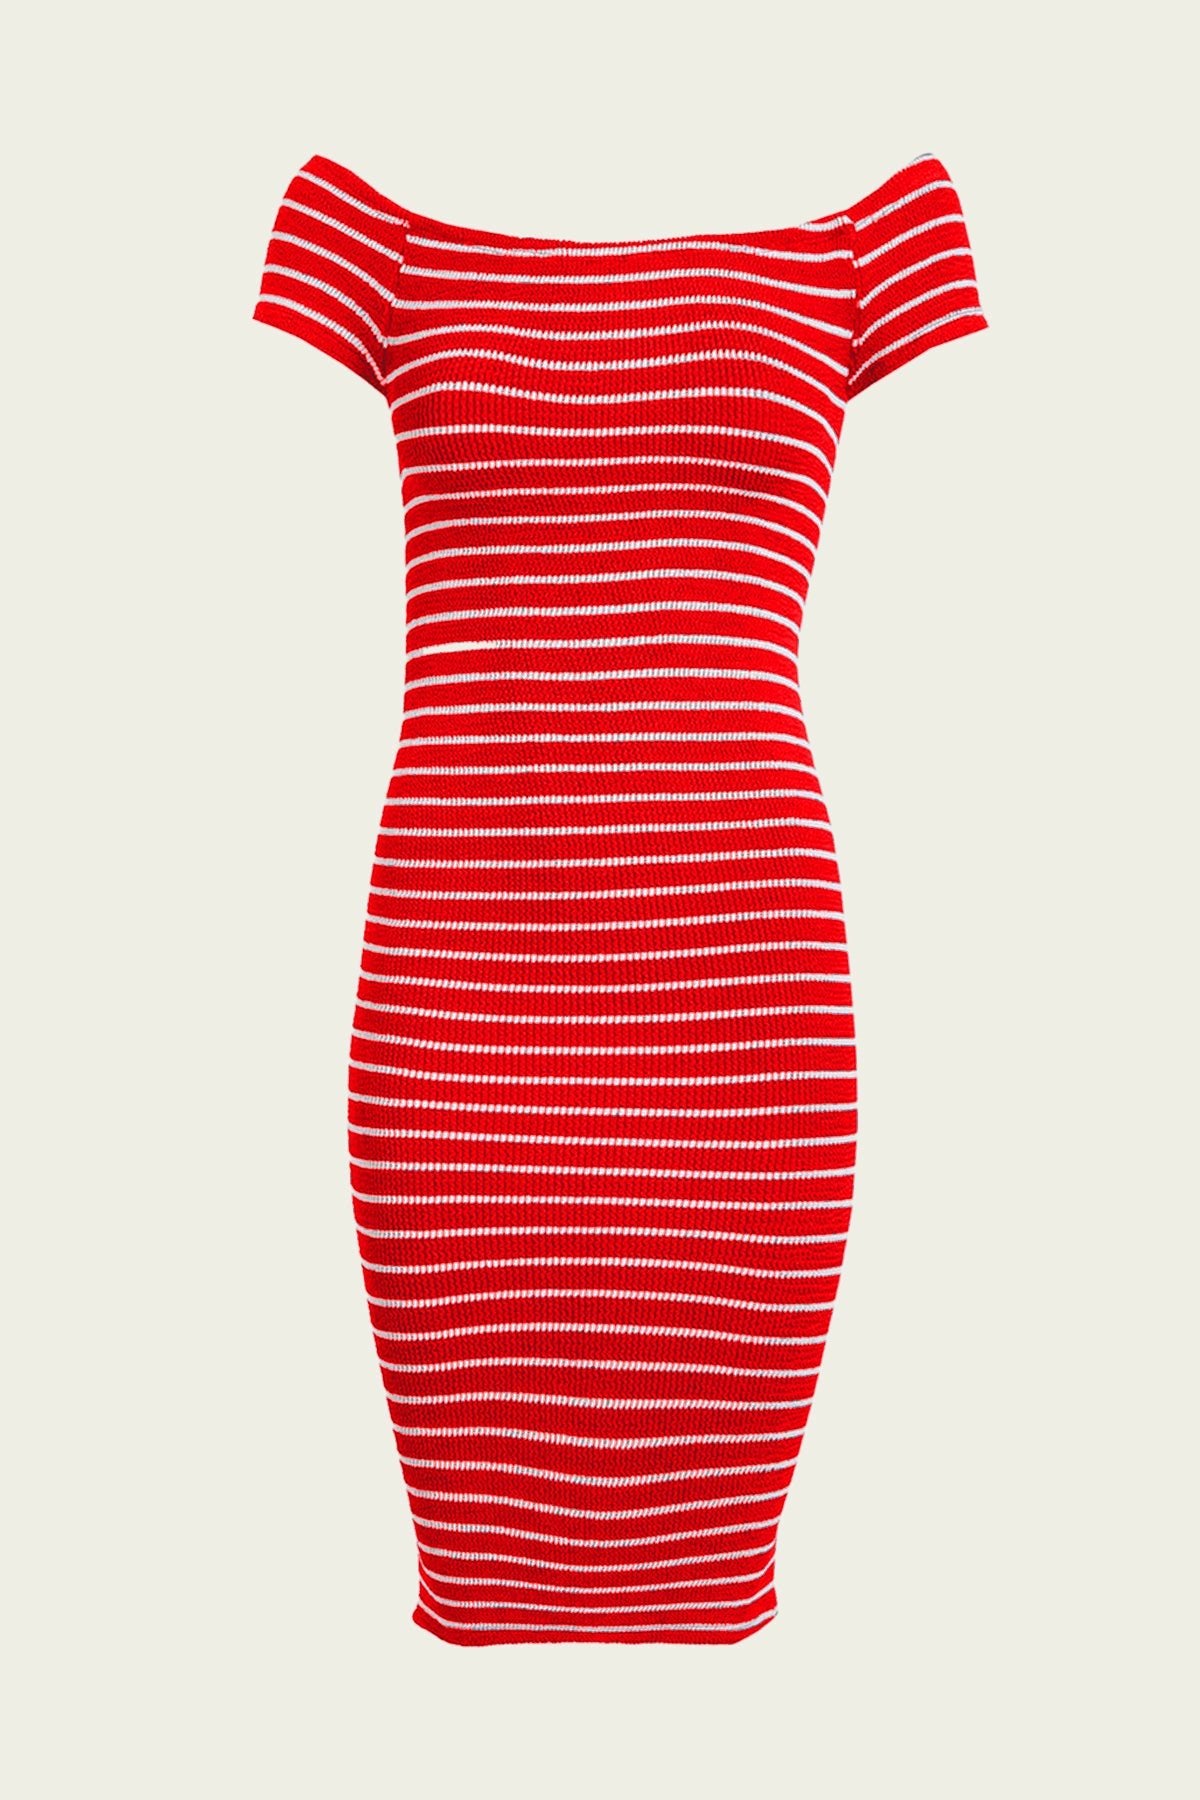 Grace Crinkle Dress in Red White - shop-olivia.com